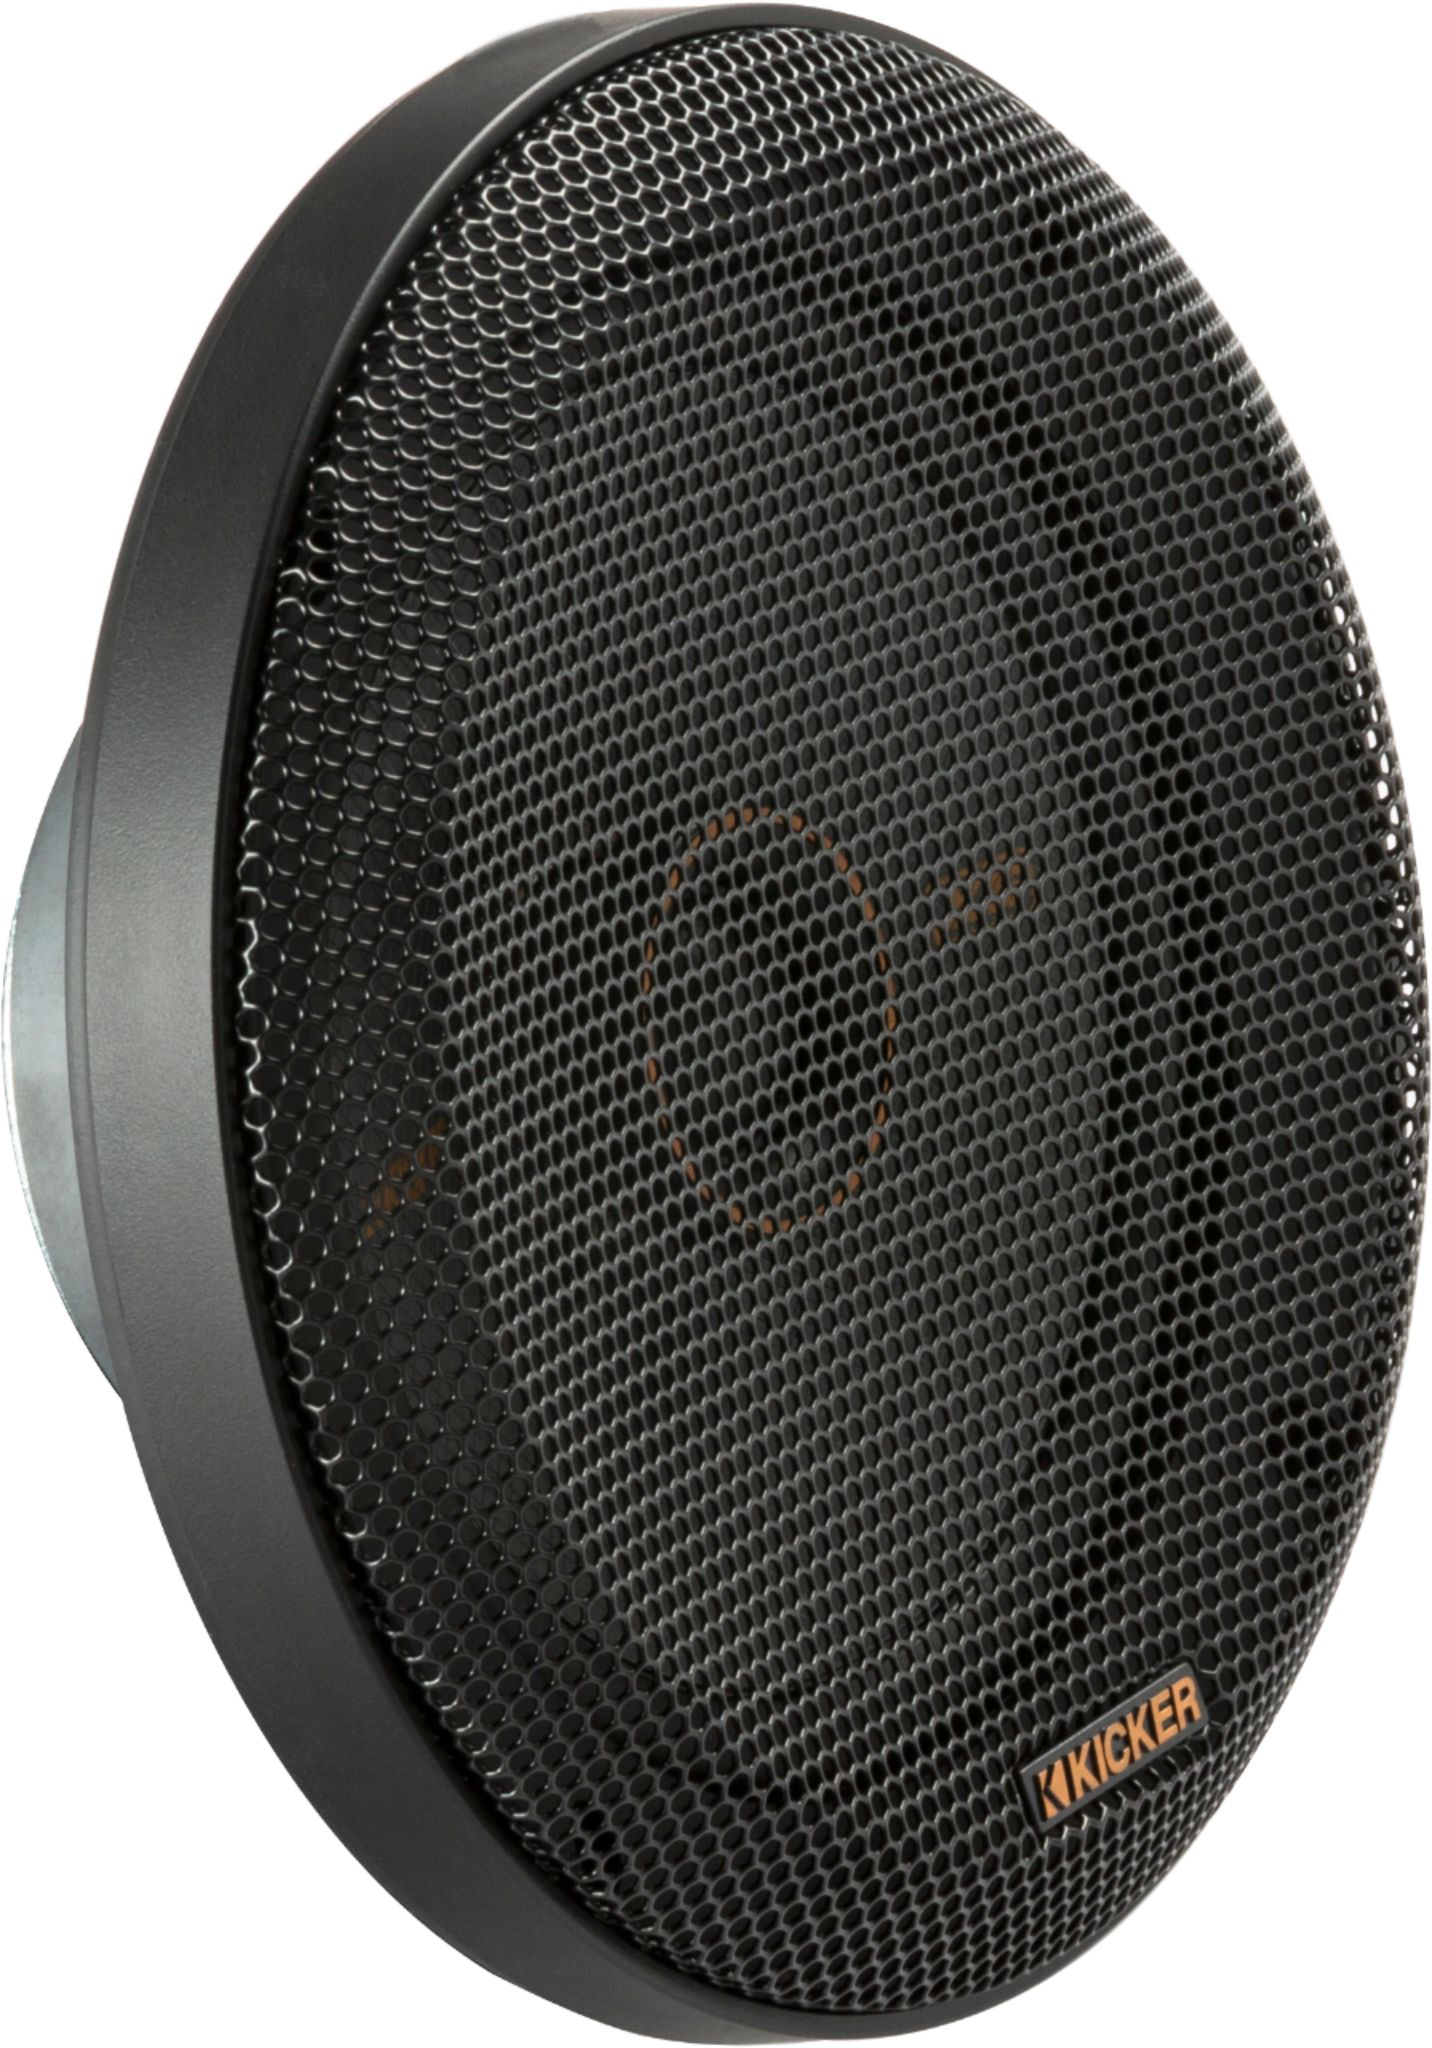 Angle View: KICKER - KS Series 6-1/2" 2-Way Car Speakers with Polypropylene Cones (Pair) - Black